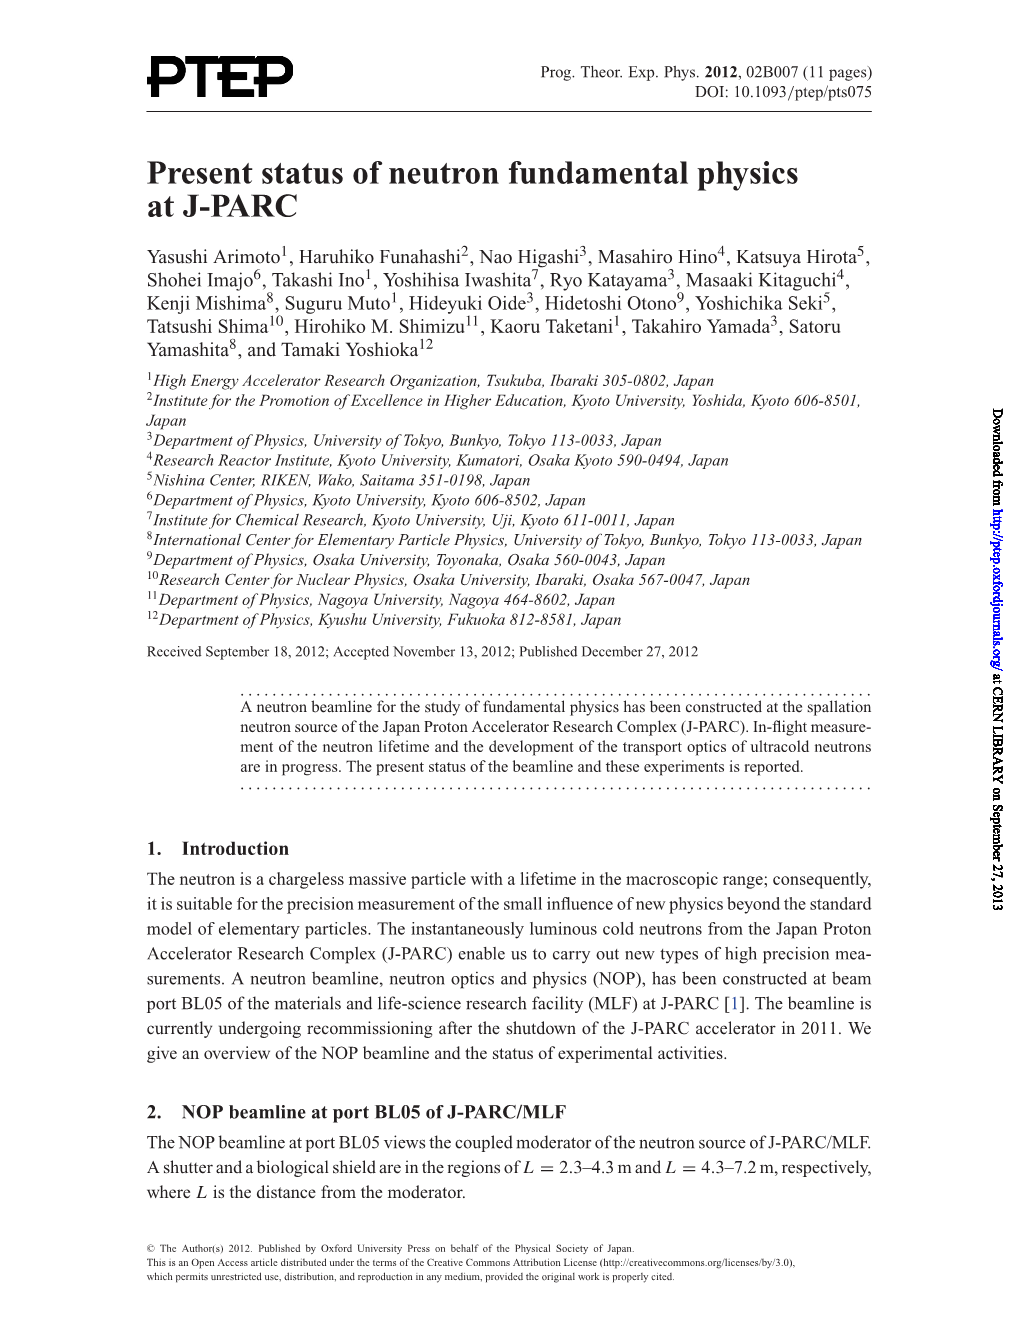 Present Status of Neutron Fundamental Physics at J-PARC